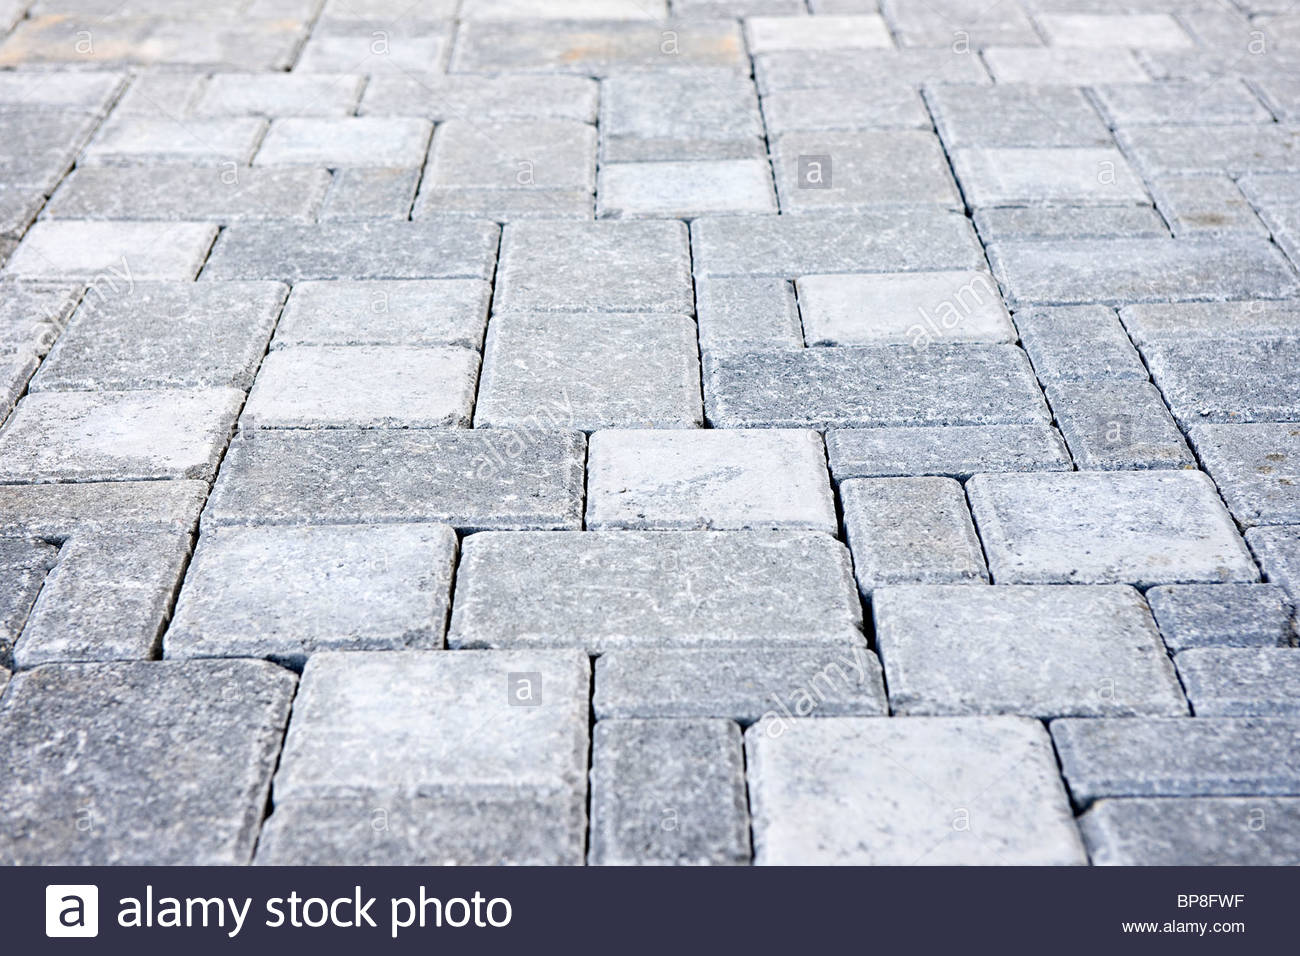 gray interlocking paving stone driveway from above - stock image ODUZJGM